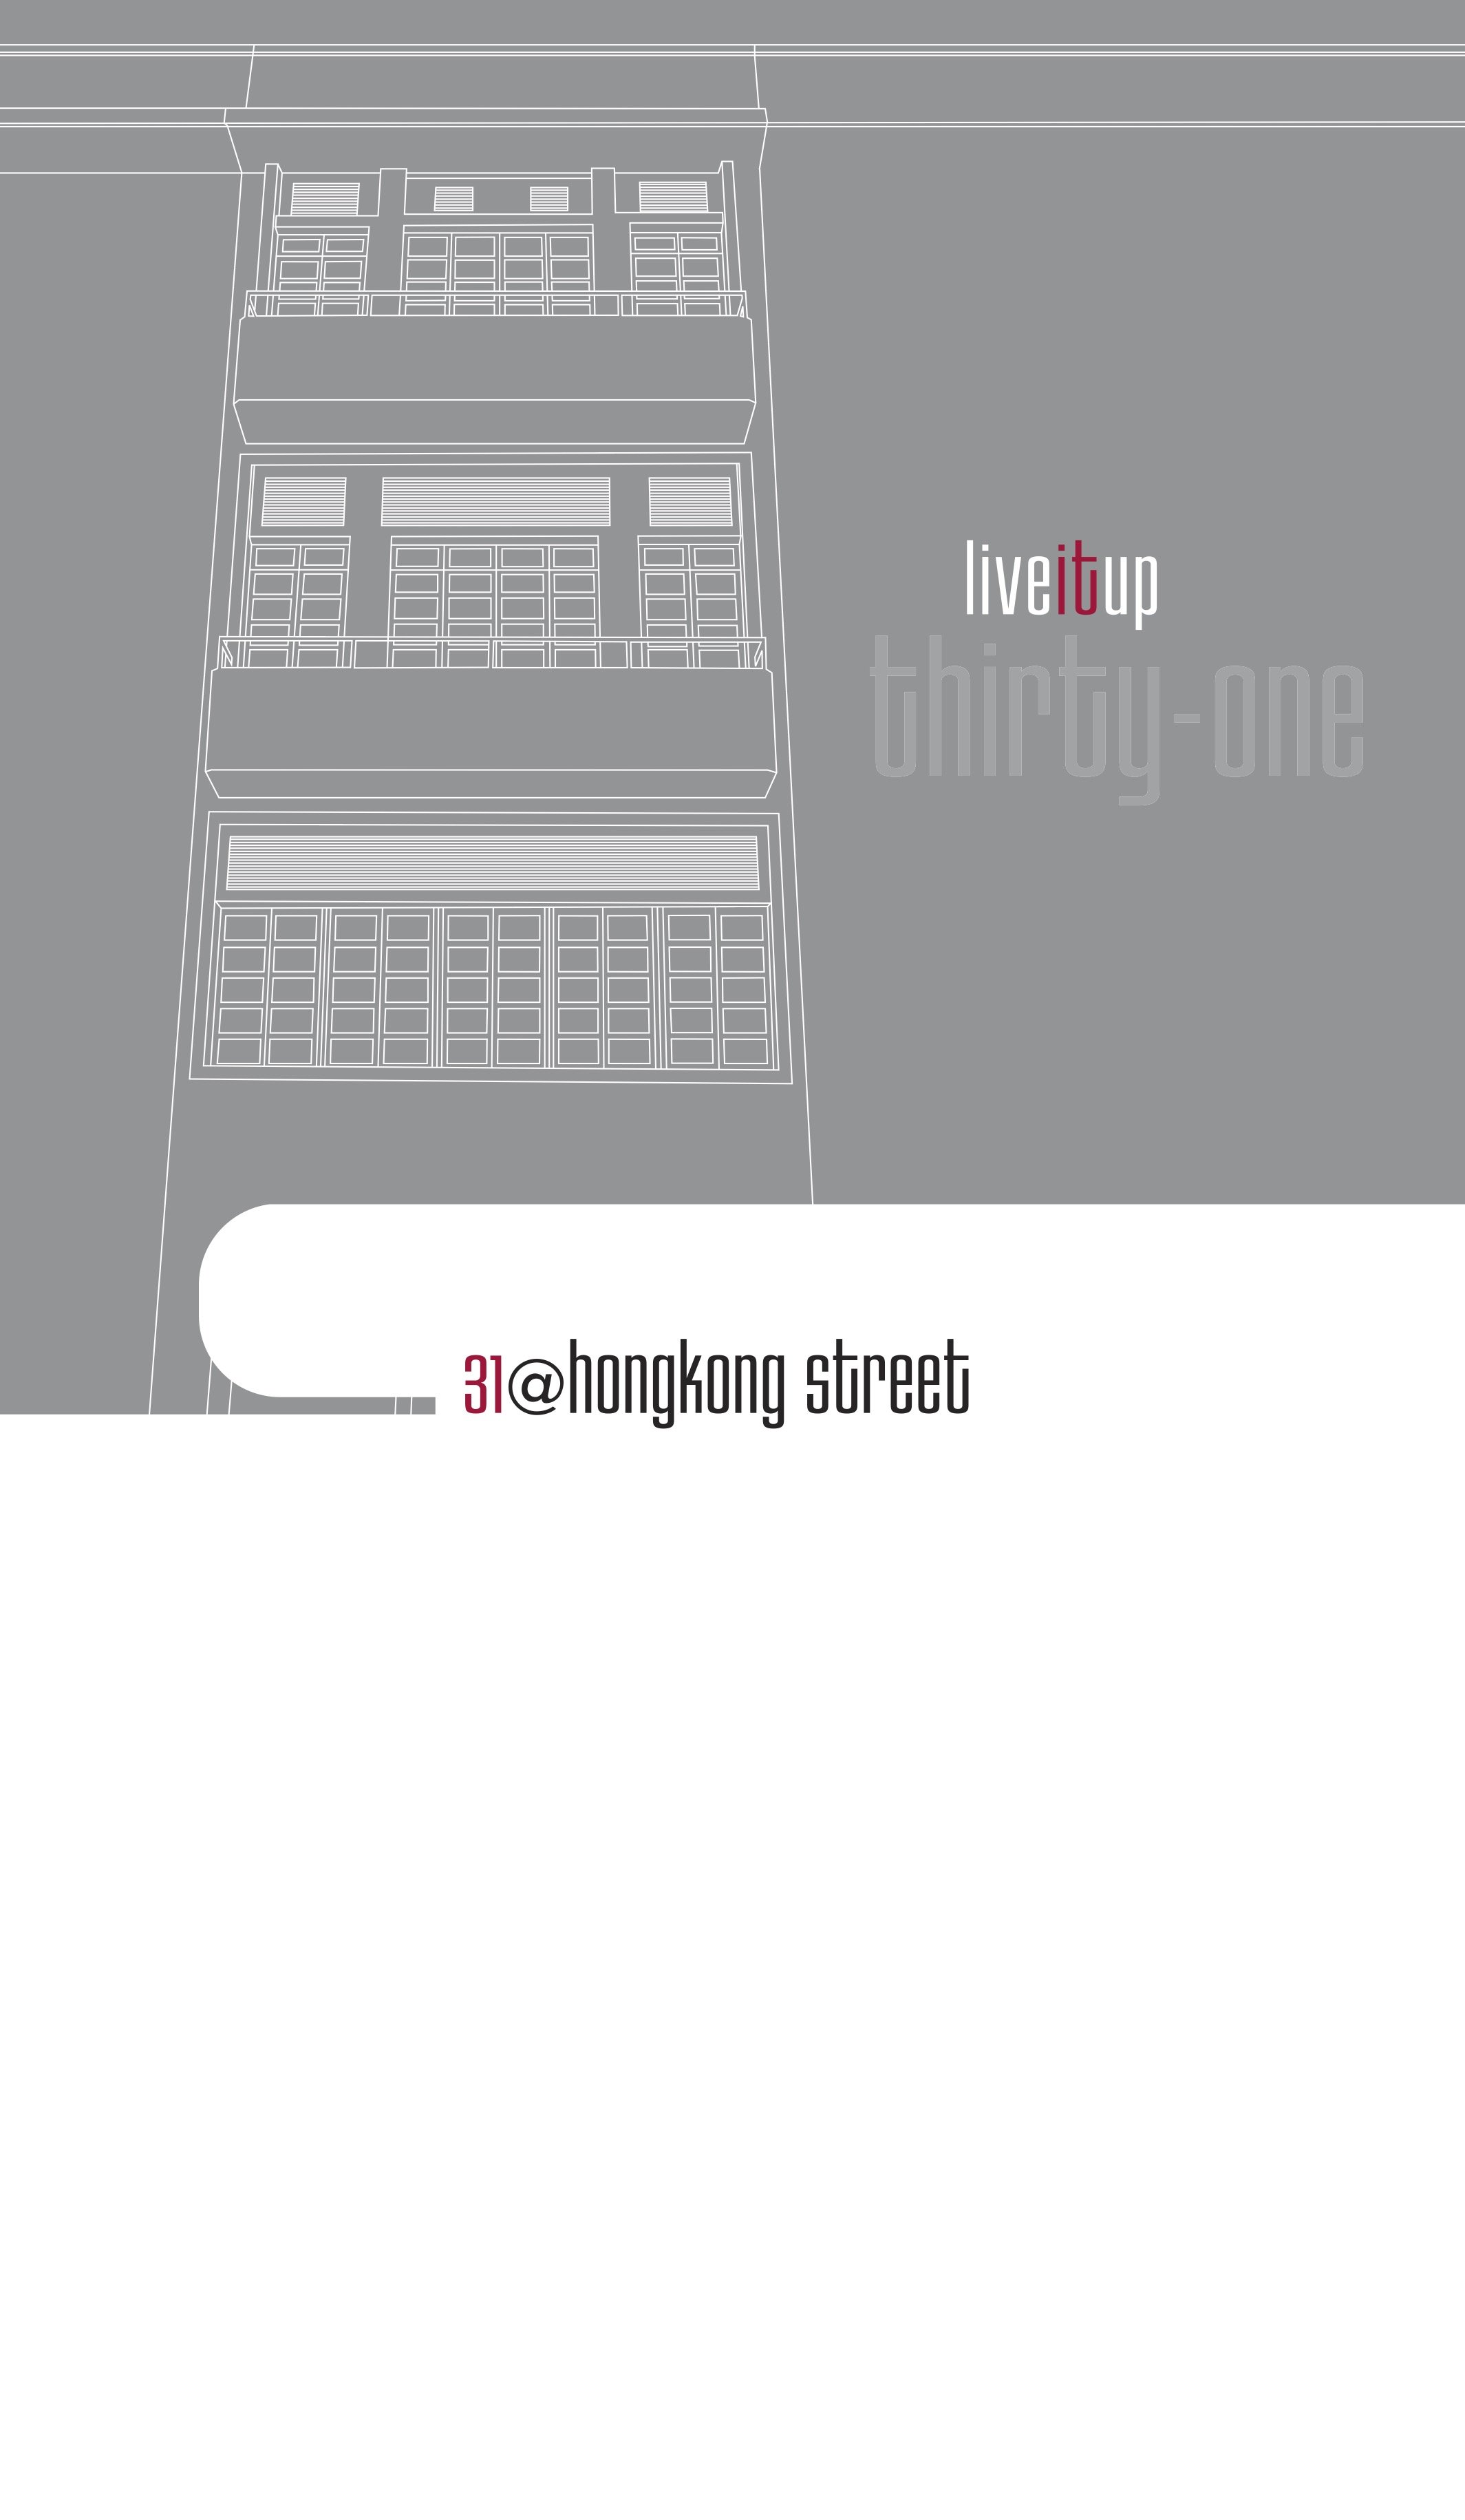 31_Hongkong_Street_brochure-001.jpg